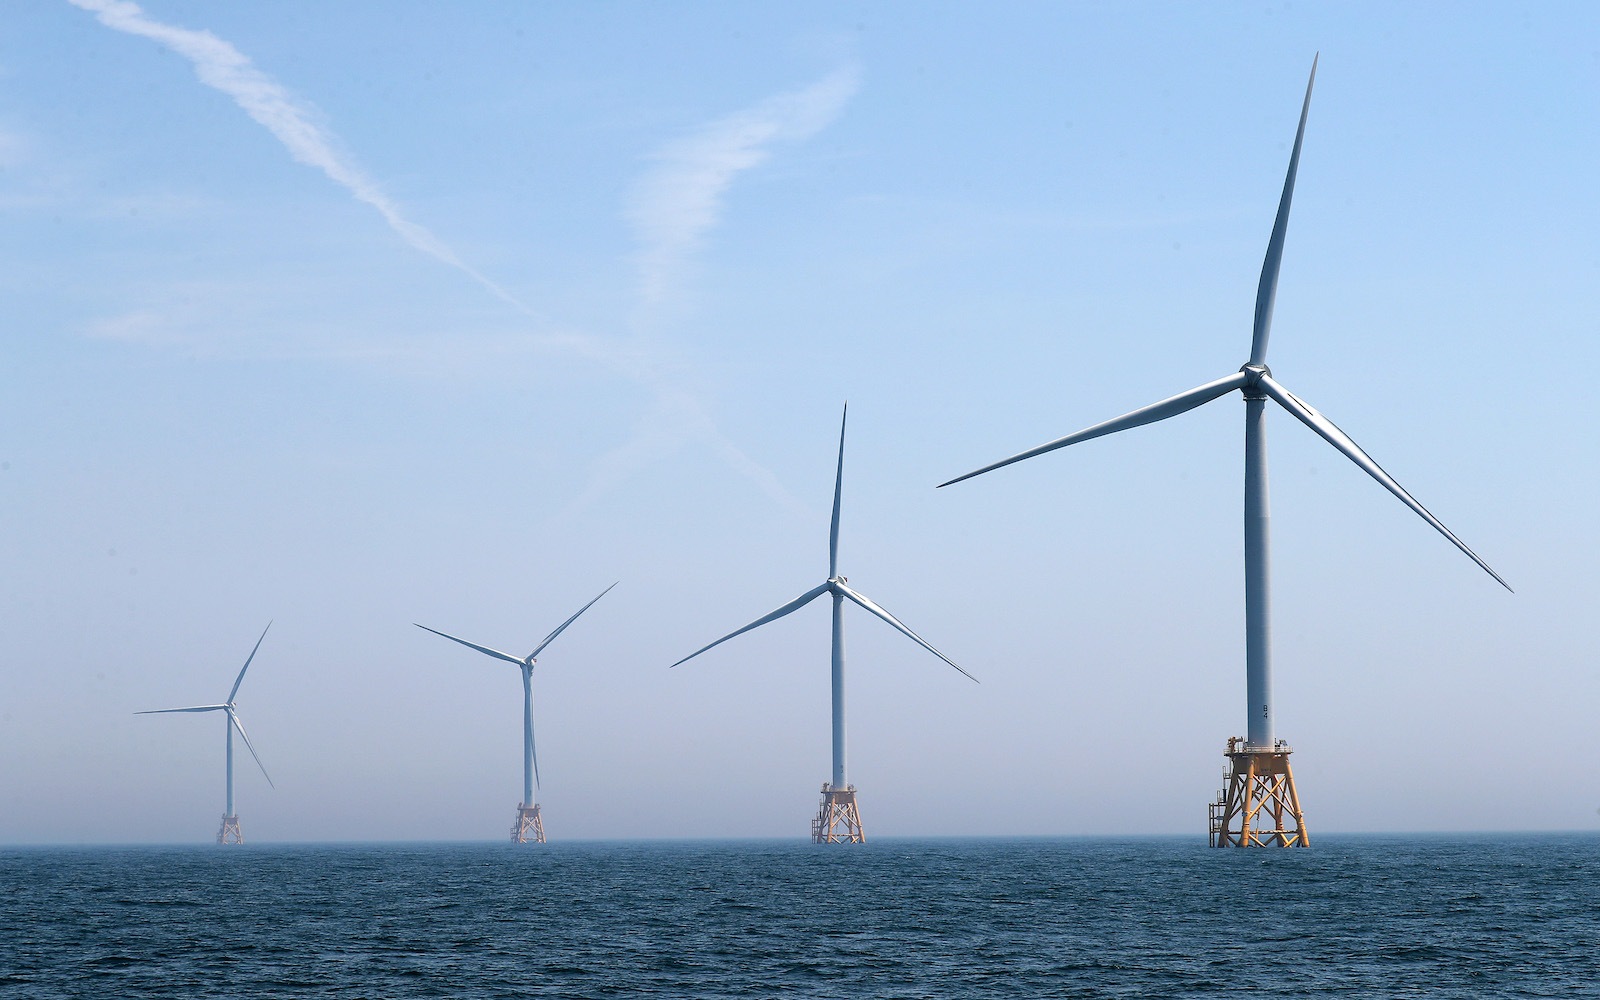 Four wind turbines in the ocean